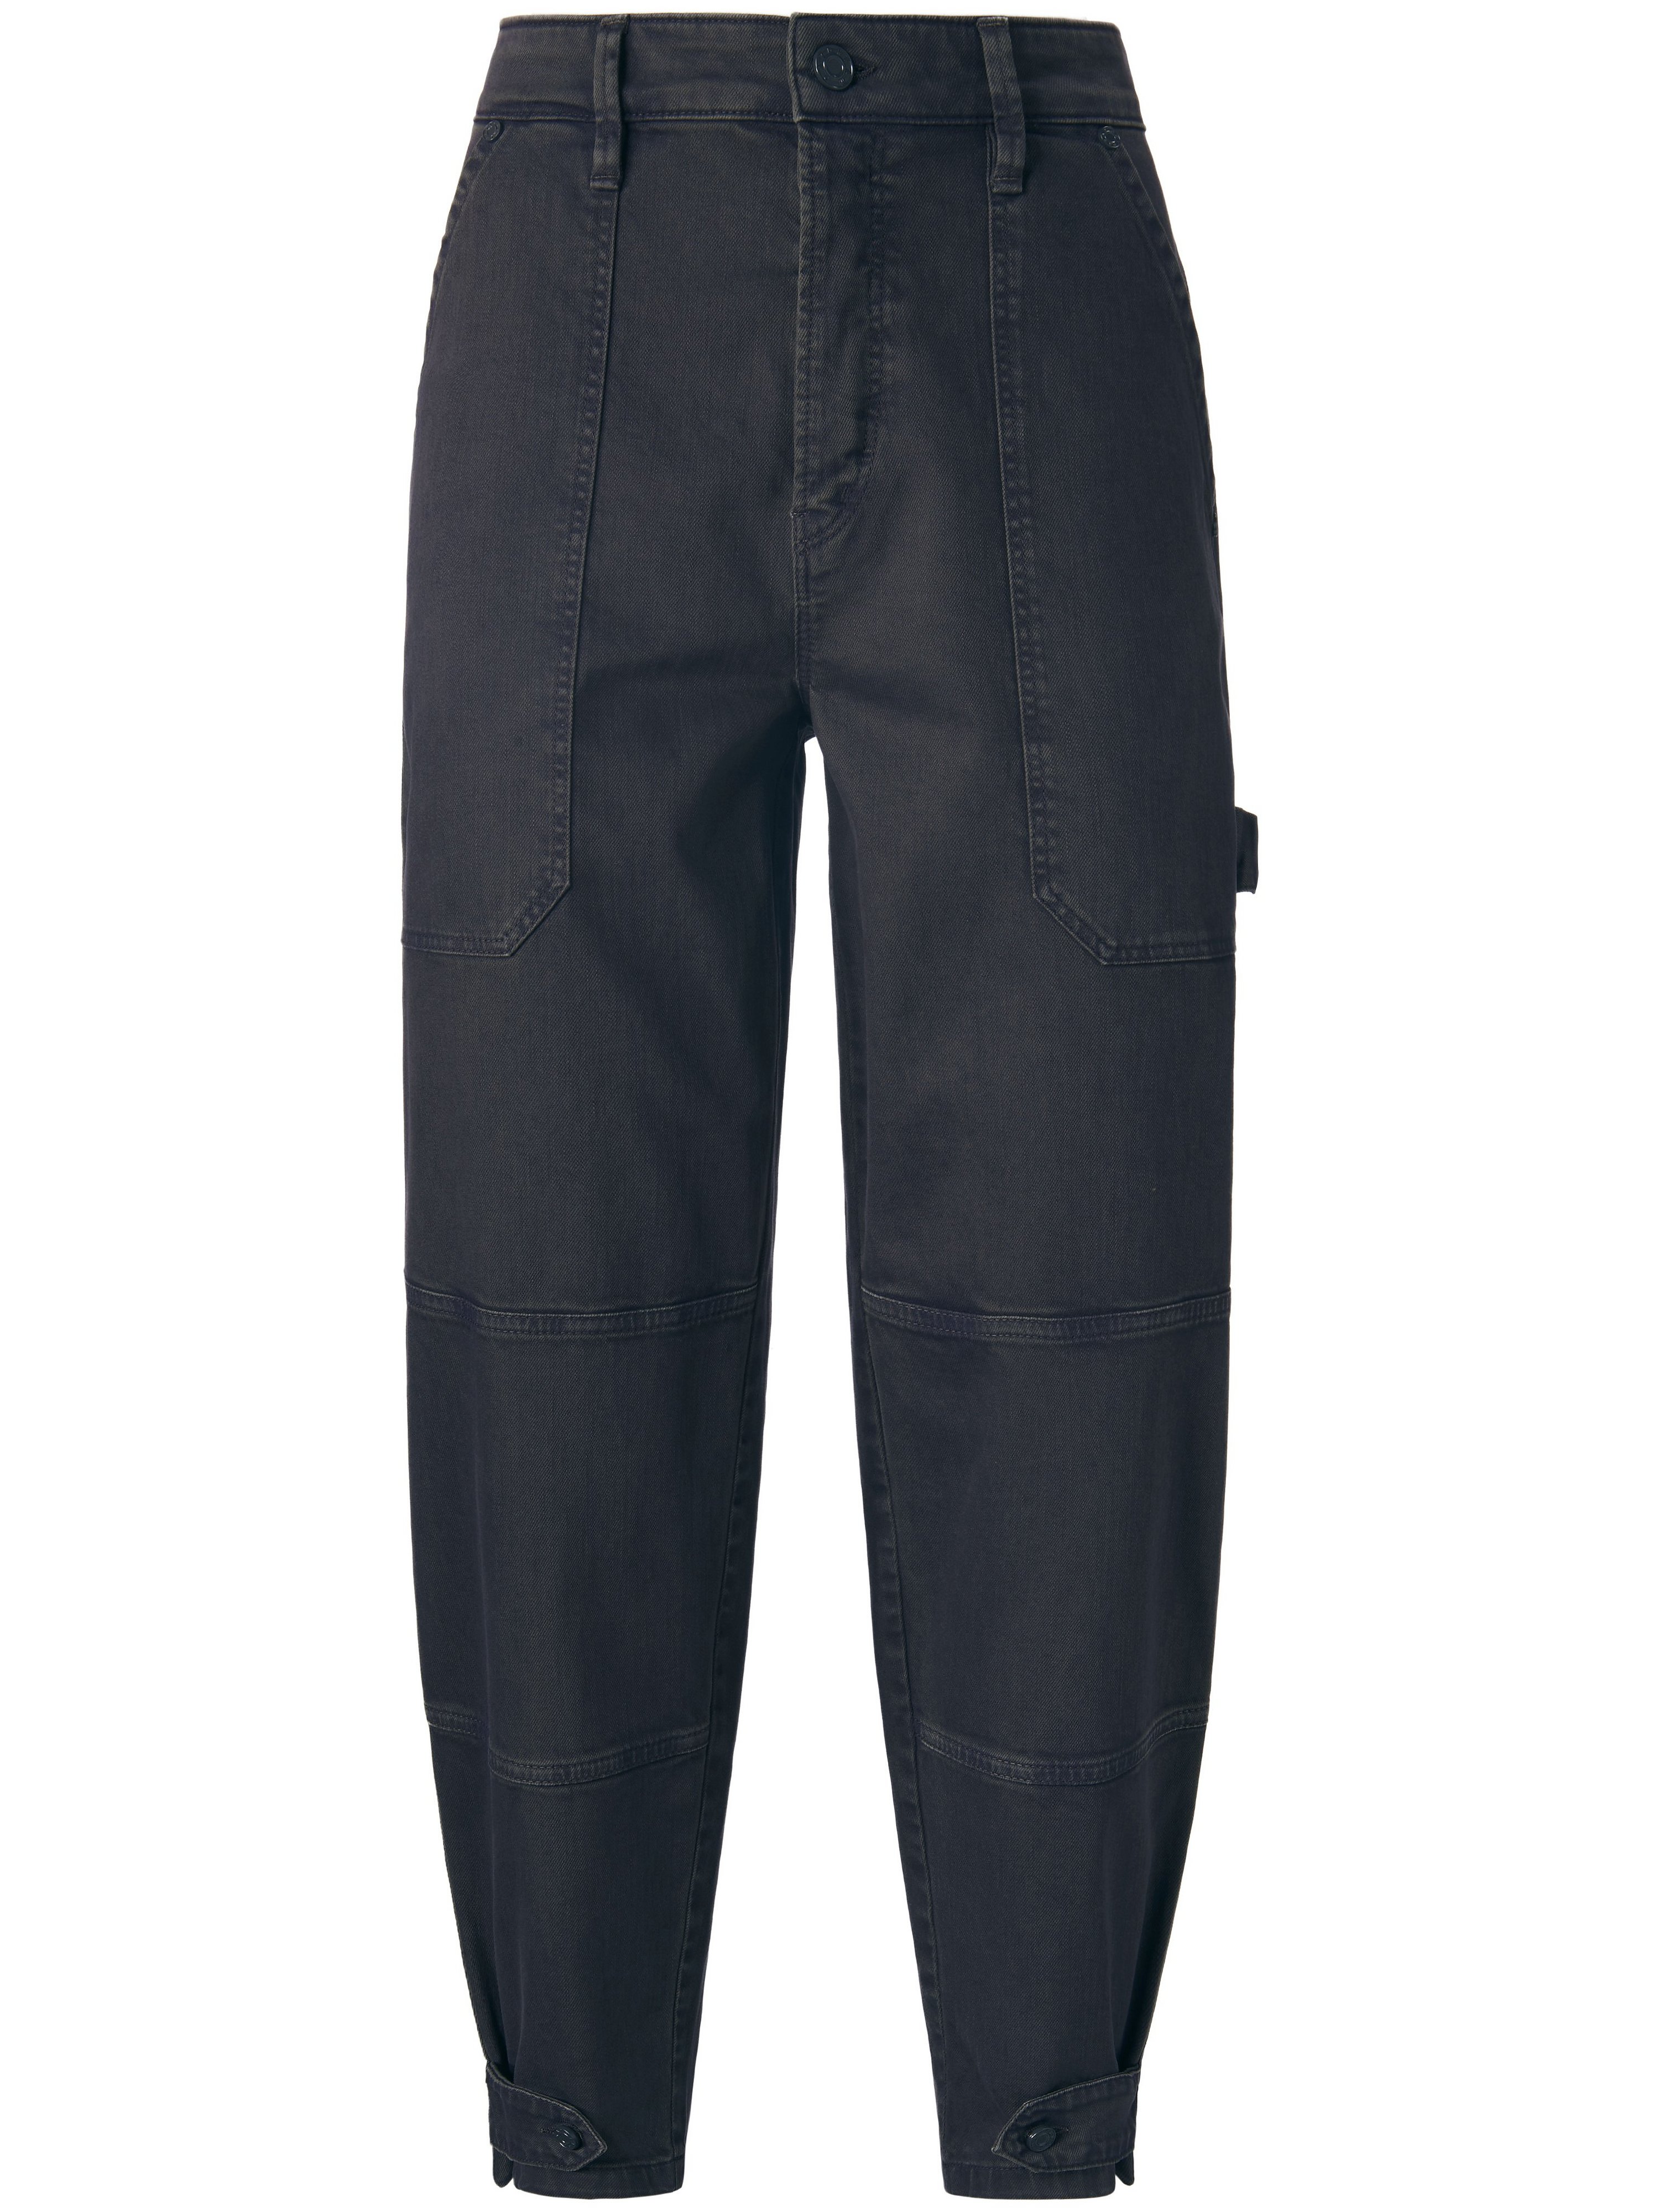 Le pantalon 7/8  MAC DAYDREAM noir